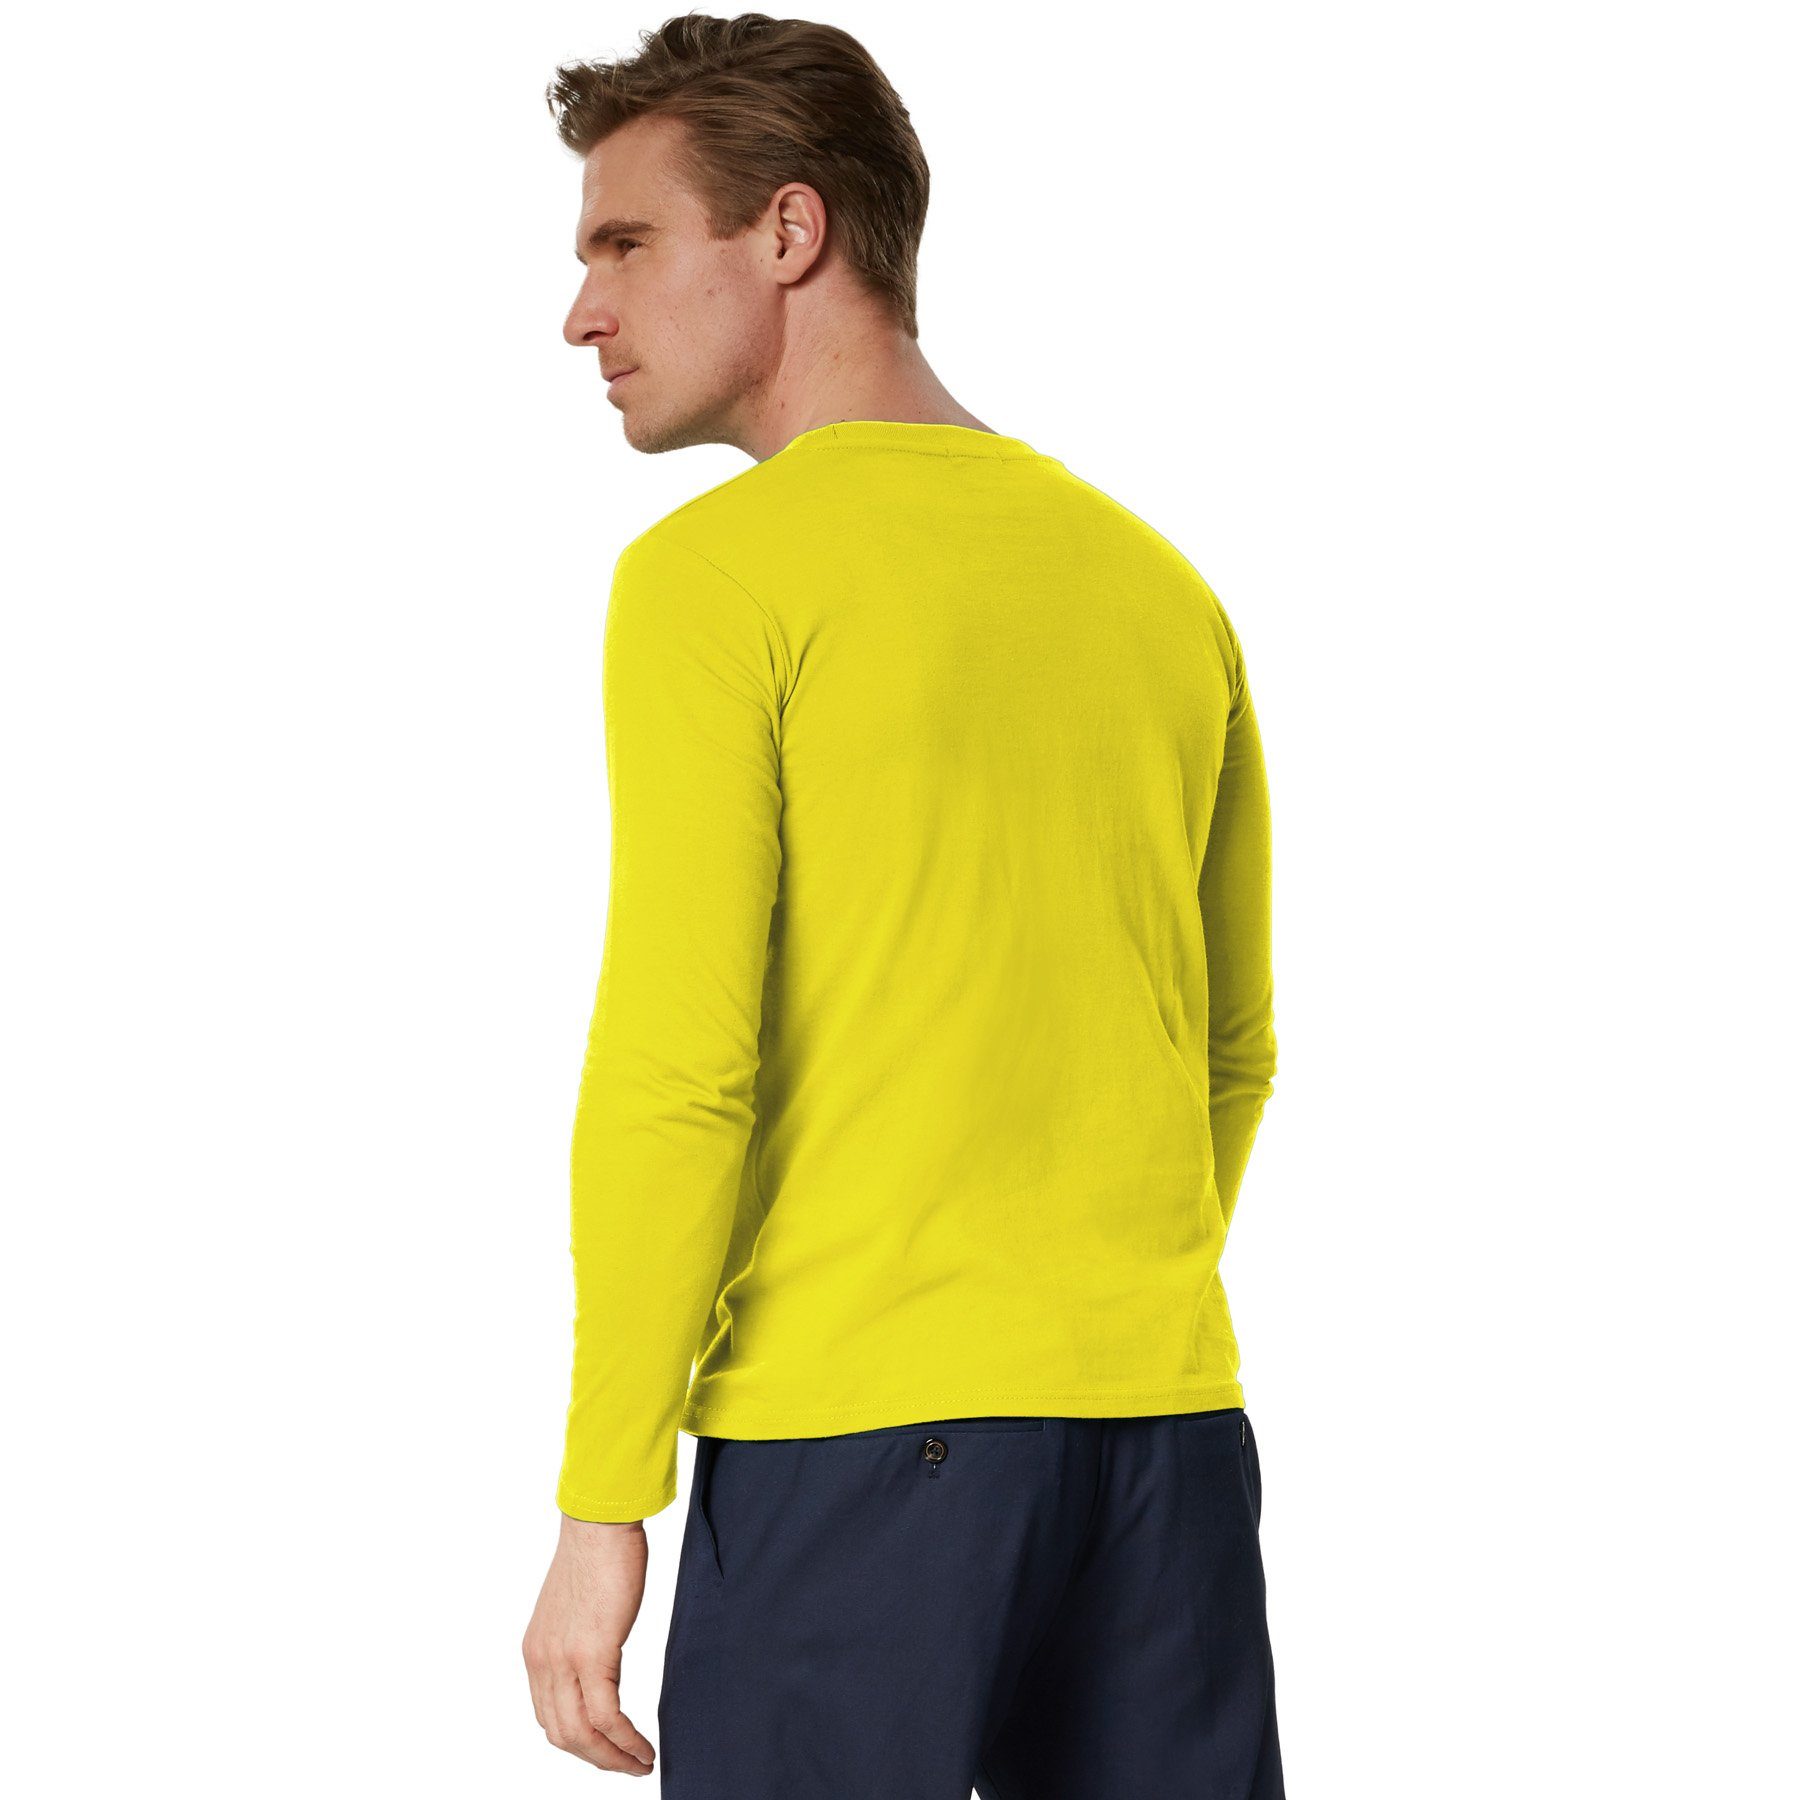 Longsleeve Männer dressforfun Langarm-Shirt Rundhals gelb